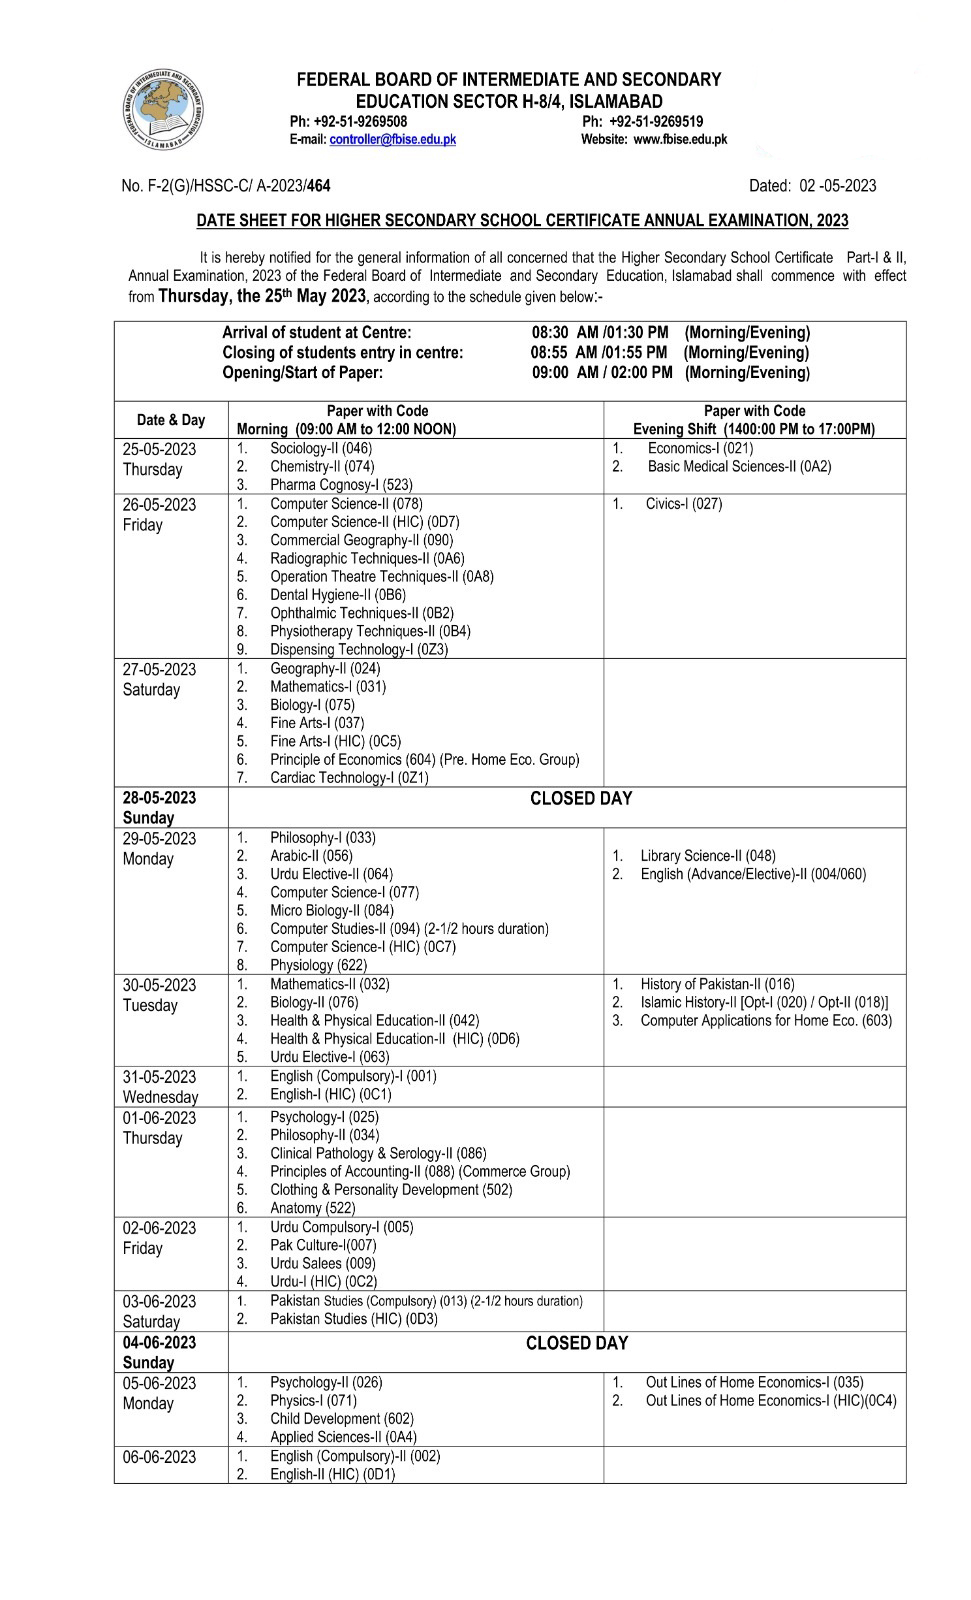 Federal Board Date Sheet 2023 HSSC 2 FBISE